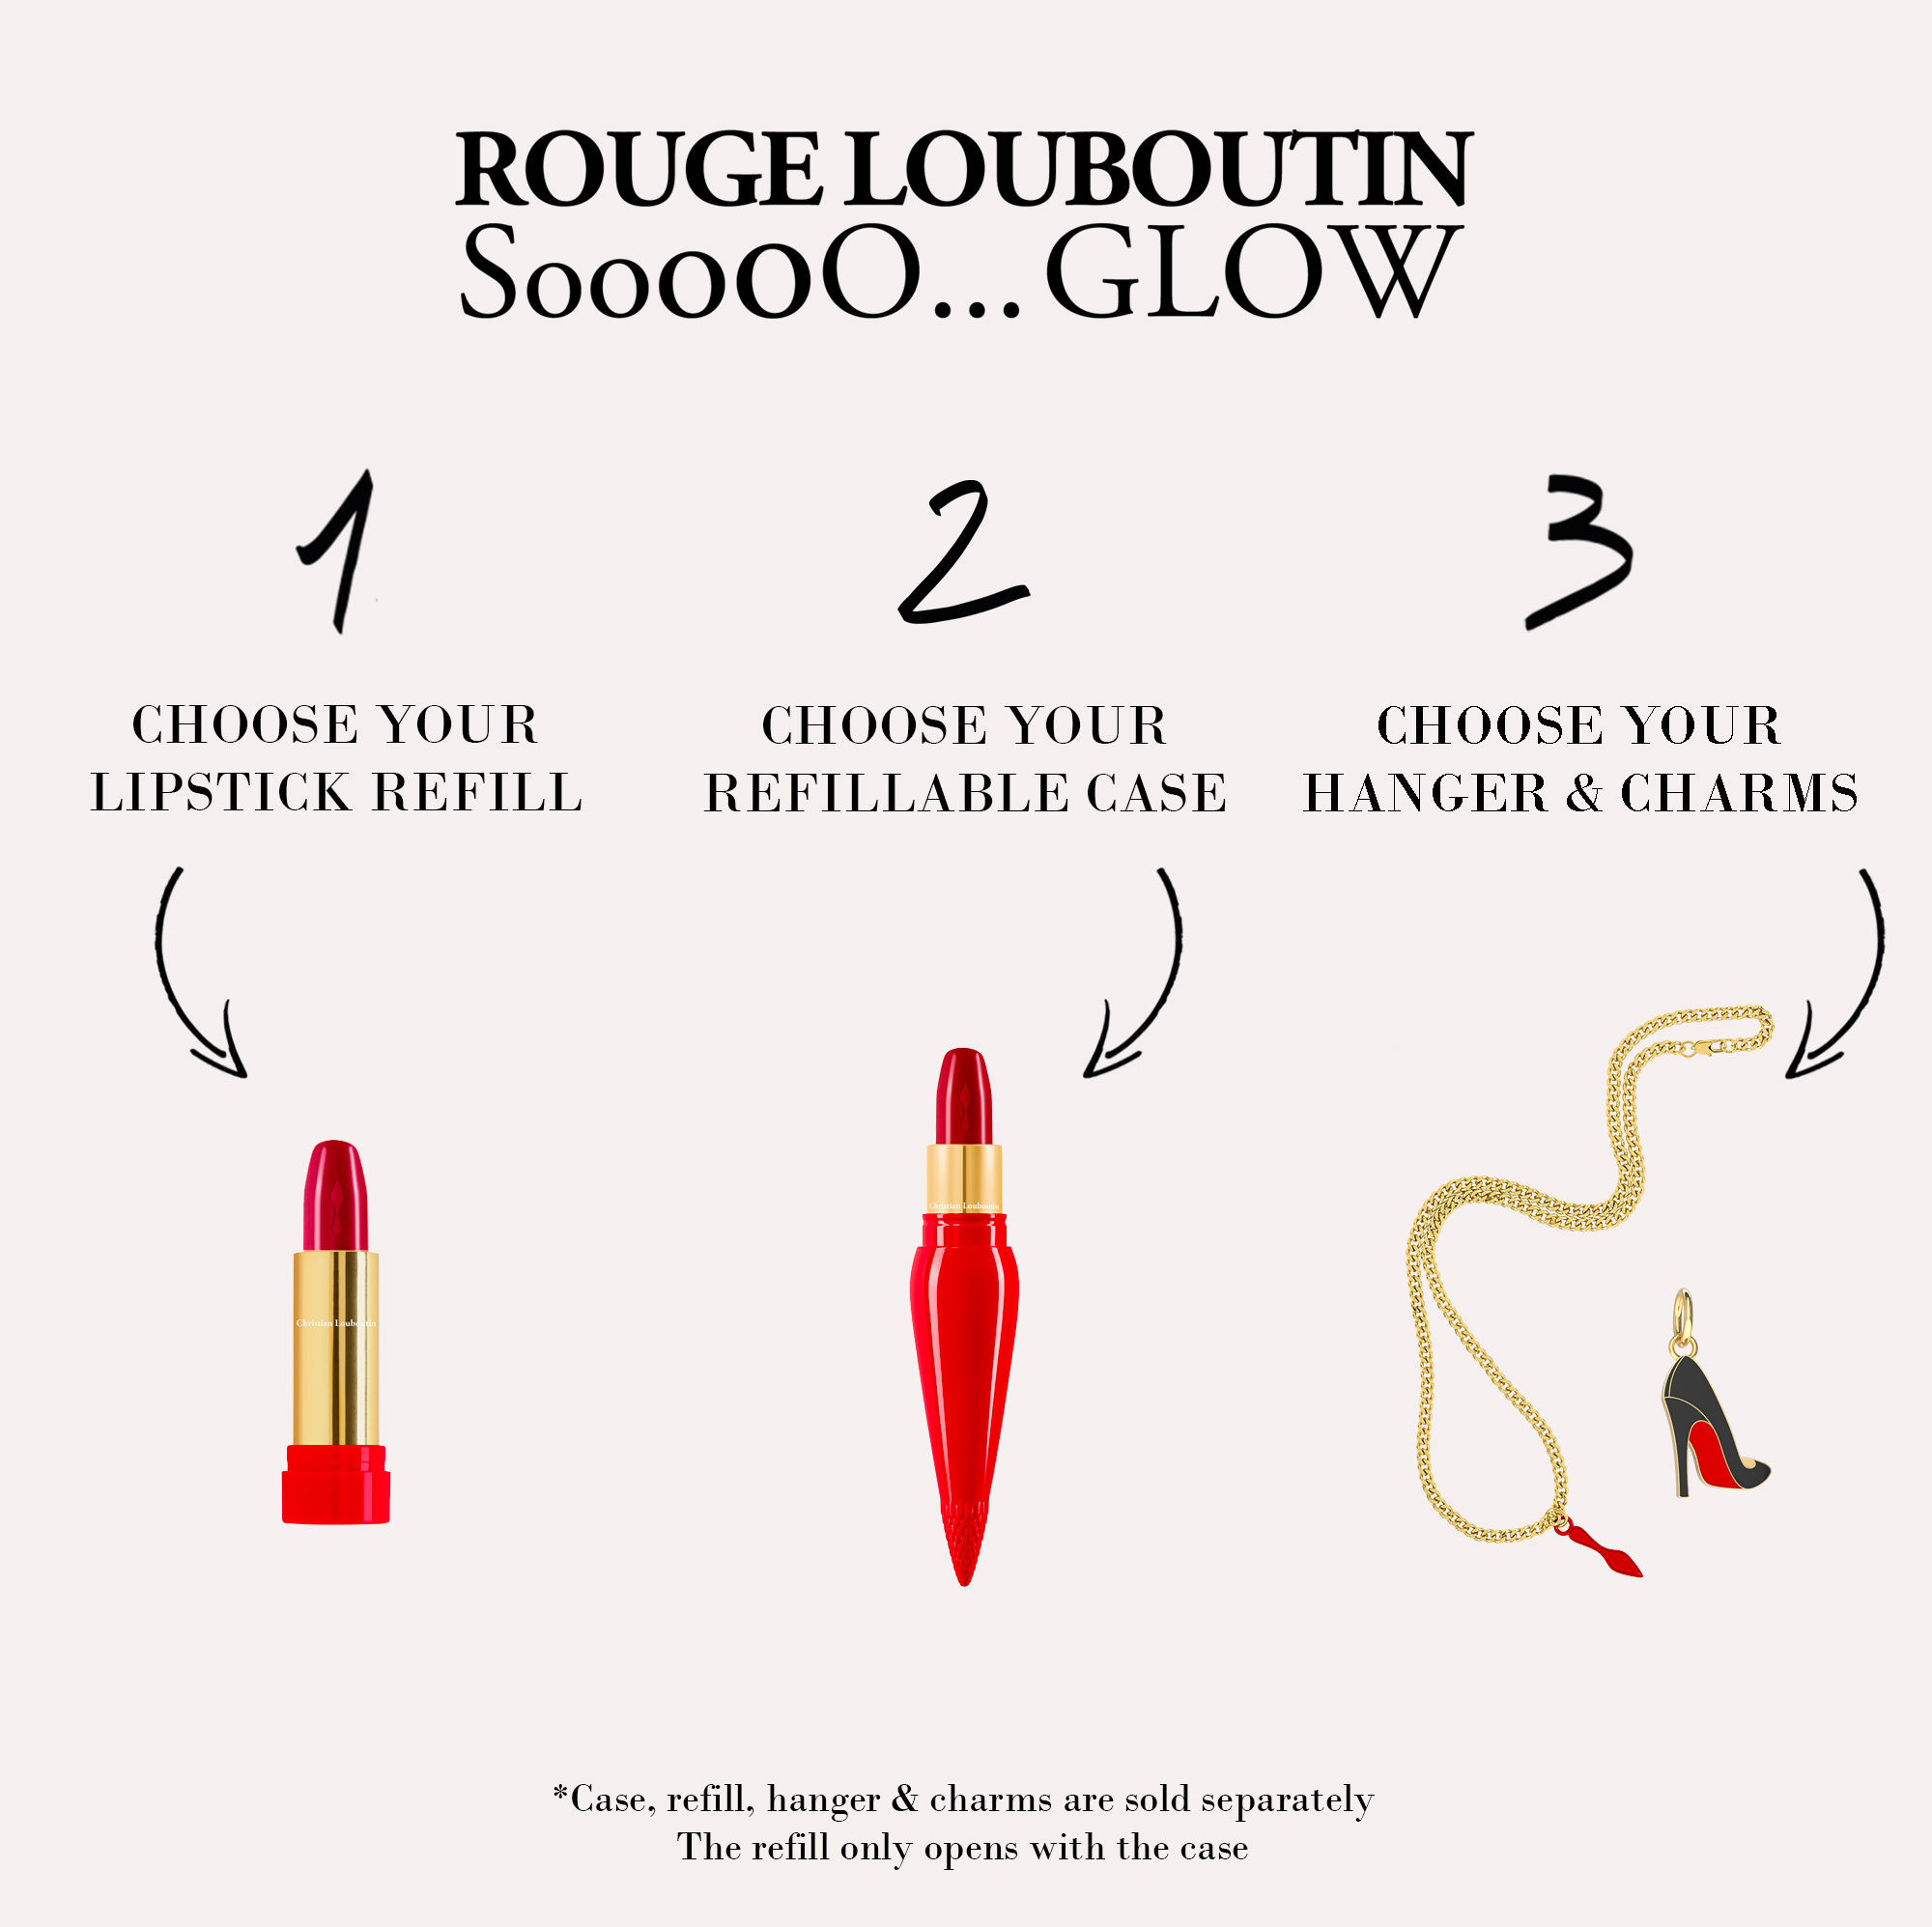 Christian Louboutin Beauty: Your Unique Rouge Louboutin SooOOO…Glow